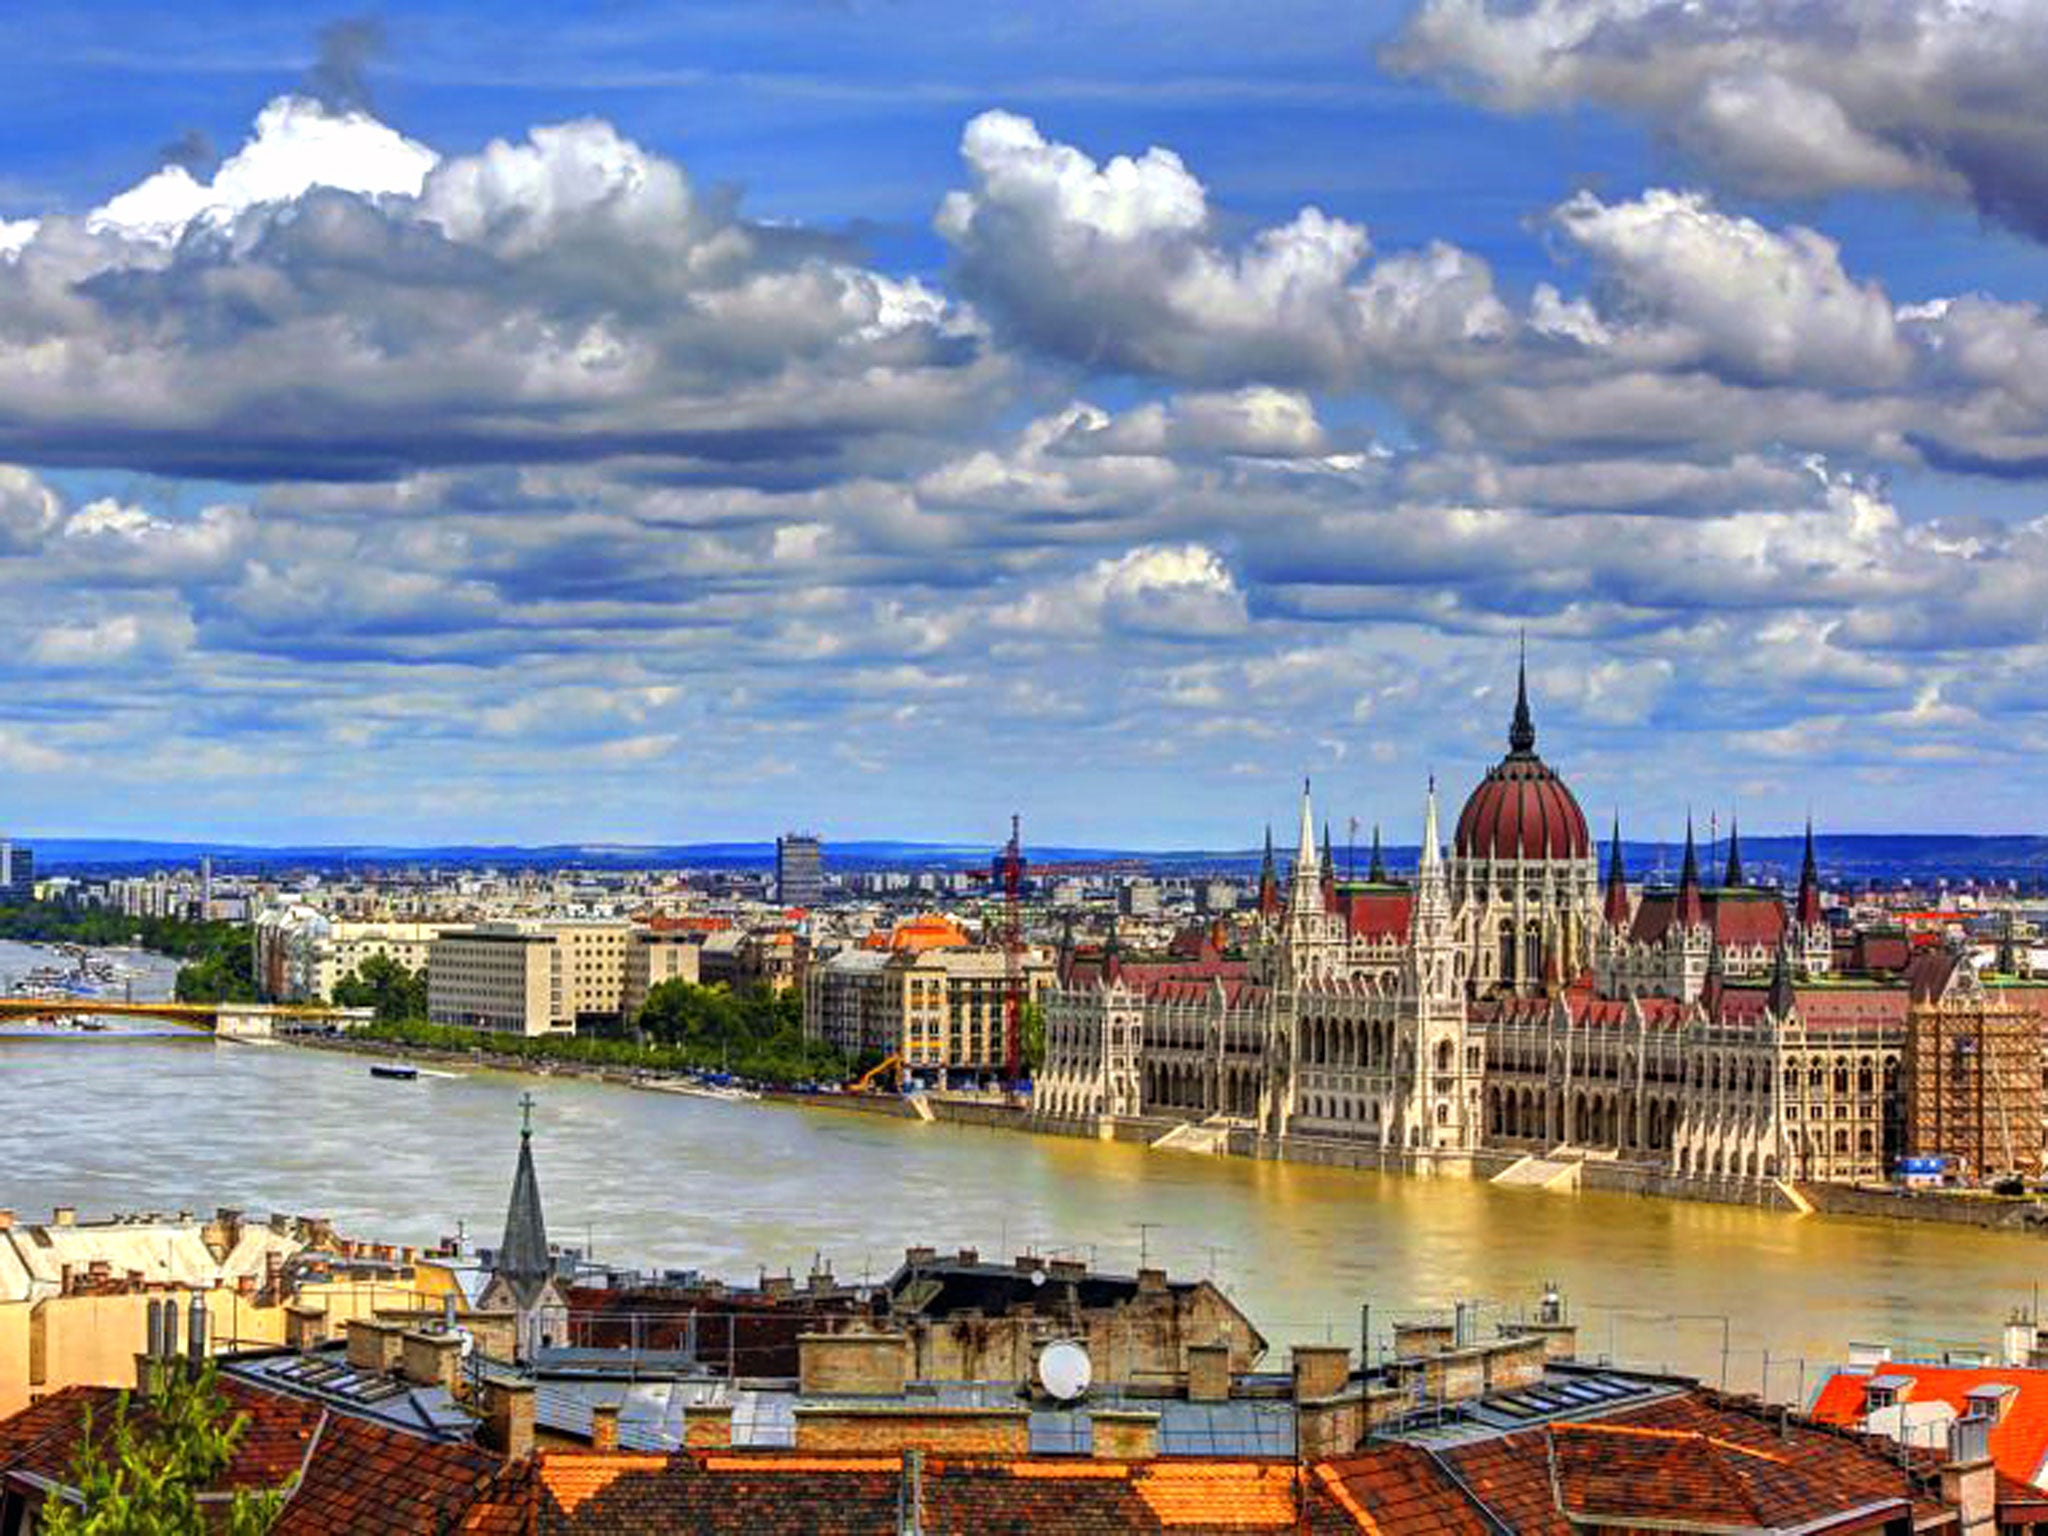 Hungary appetite: Budapest appealed to Jenna Coleman